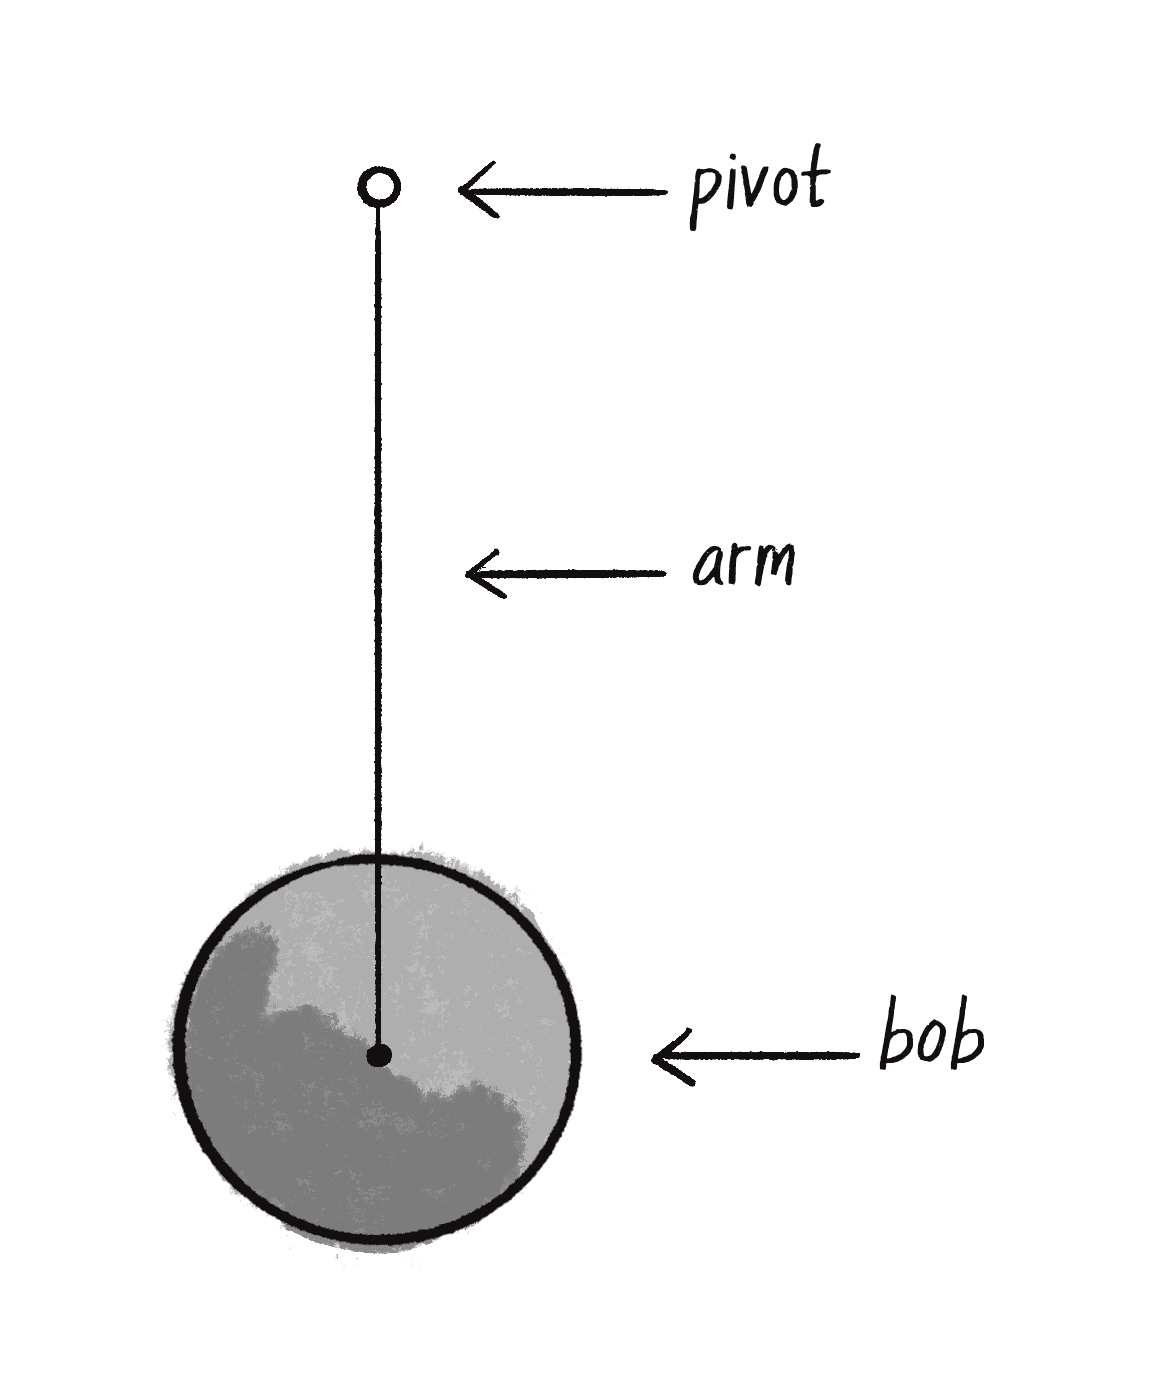 Figure 3.15: A pendulum with a pivot, arm, and bob